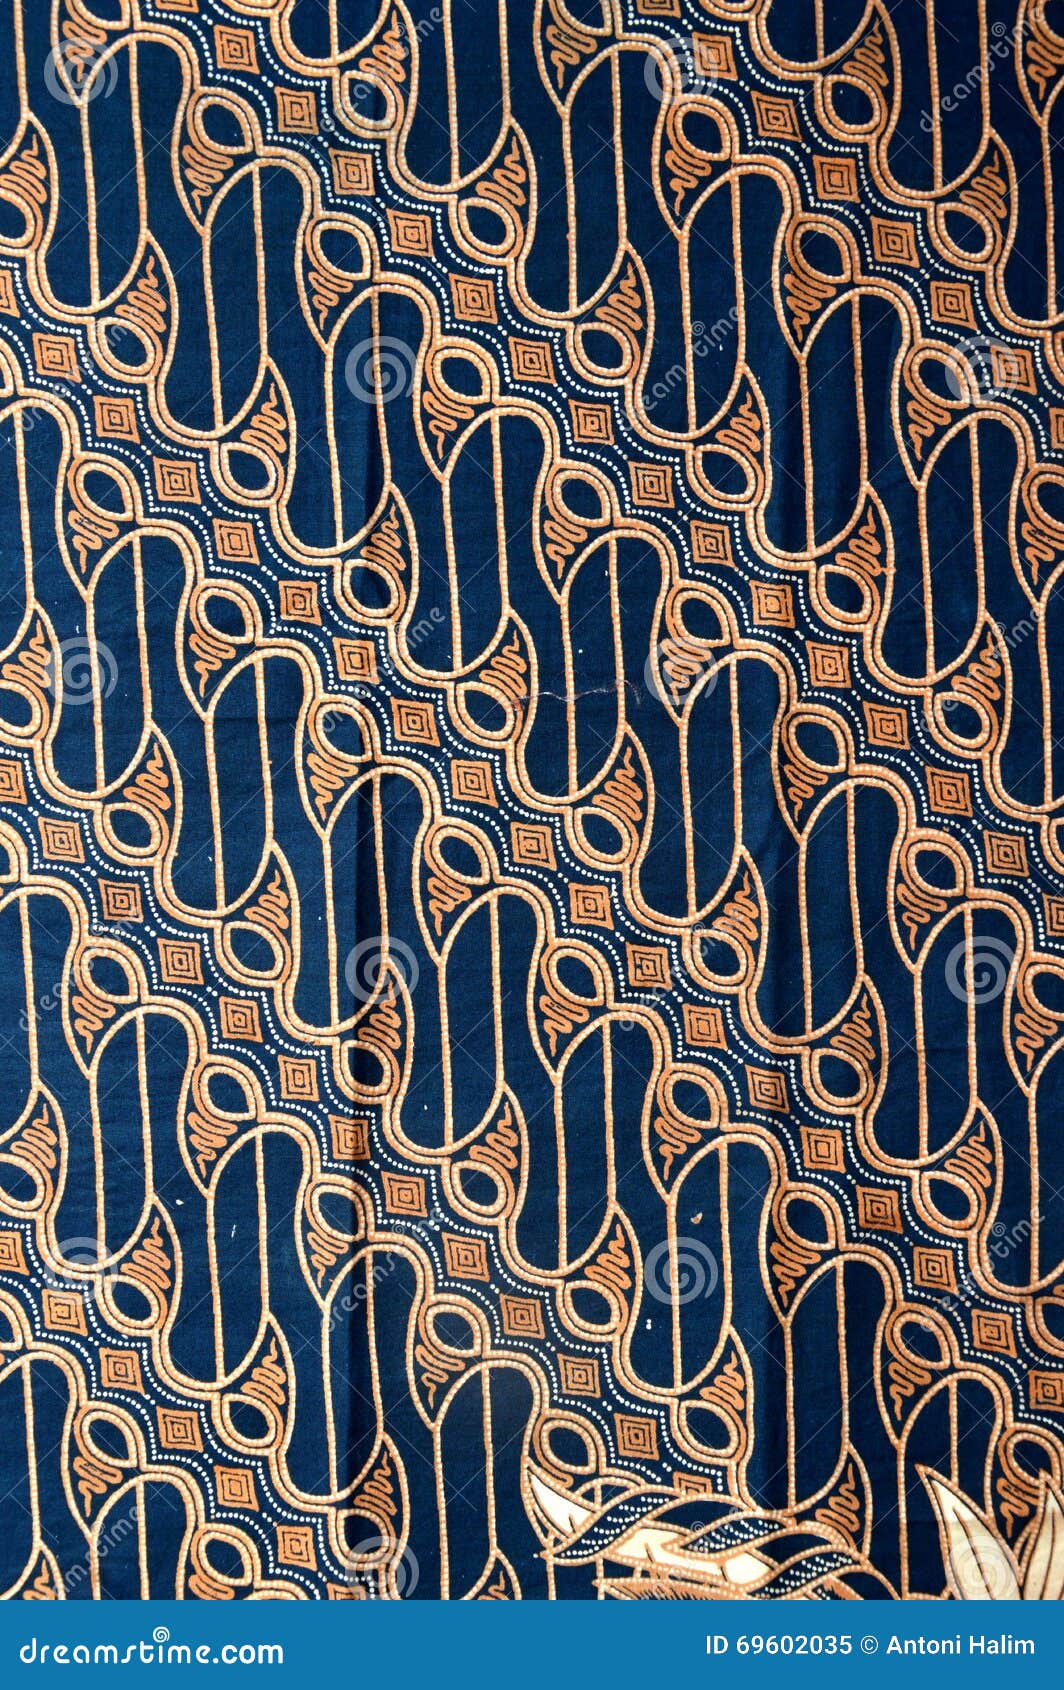  Batik cloth  stock image Image of clothing  cloths flower 